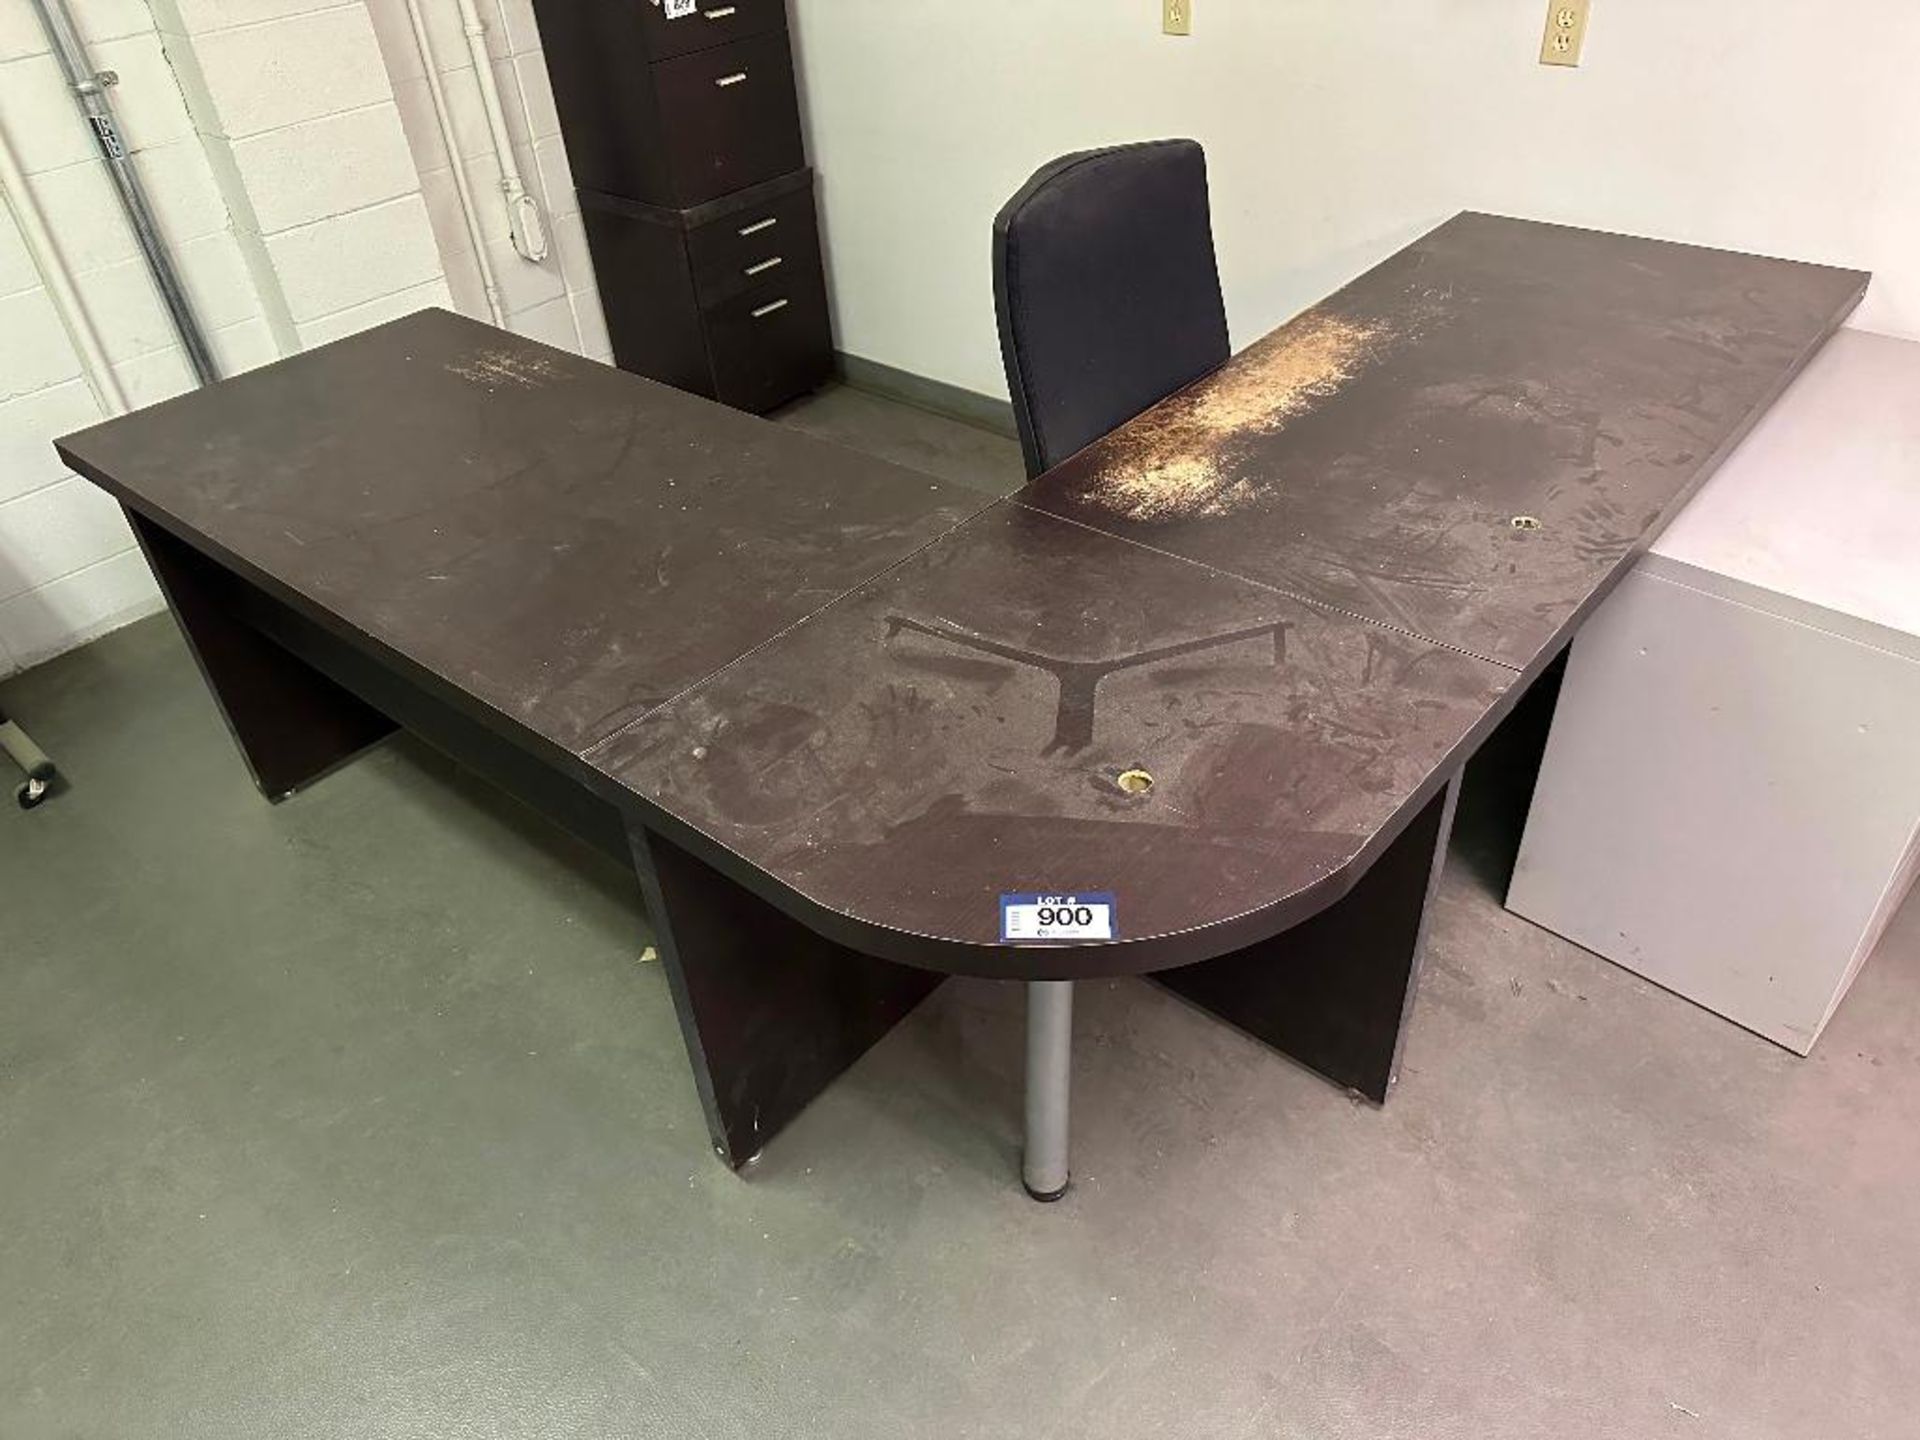 L-Shaped Desk w/ Task Chair